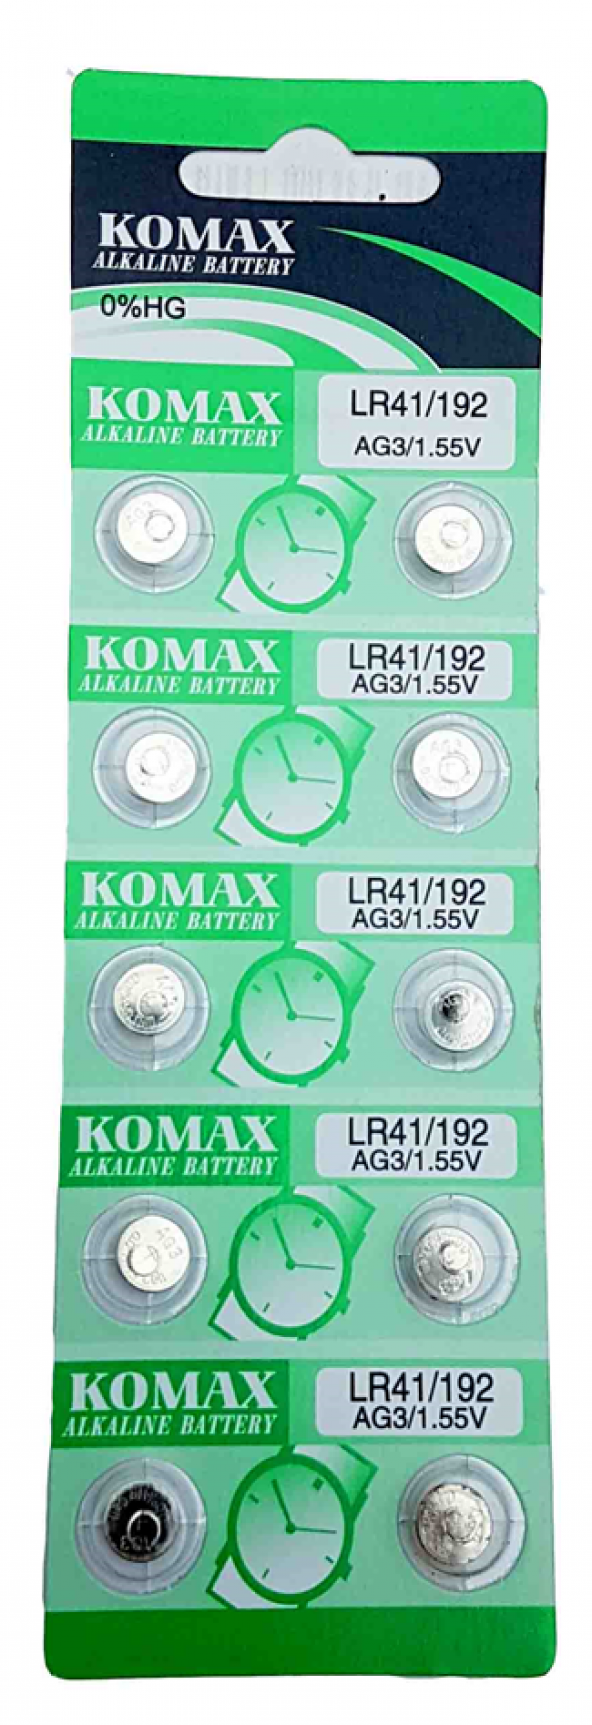 gik Komax AG3/LR41/142 Pil 10lu Kart Alkaline Düğme Pil